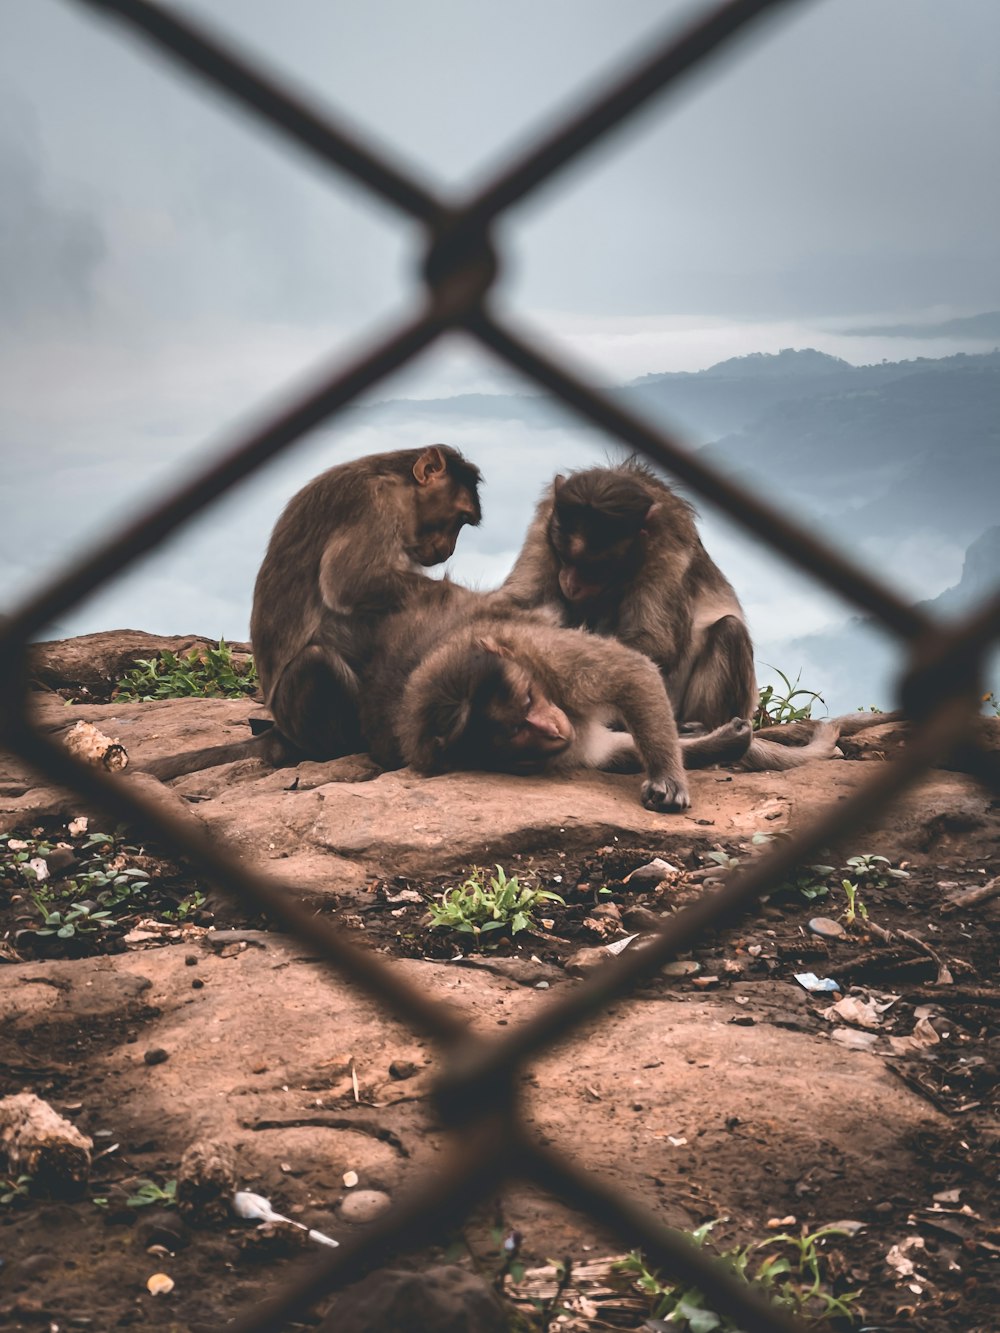 a group of monkeys sitting on a log